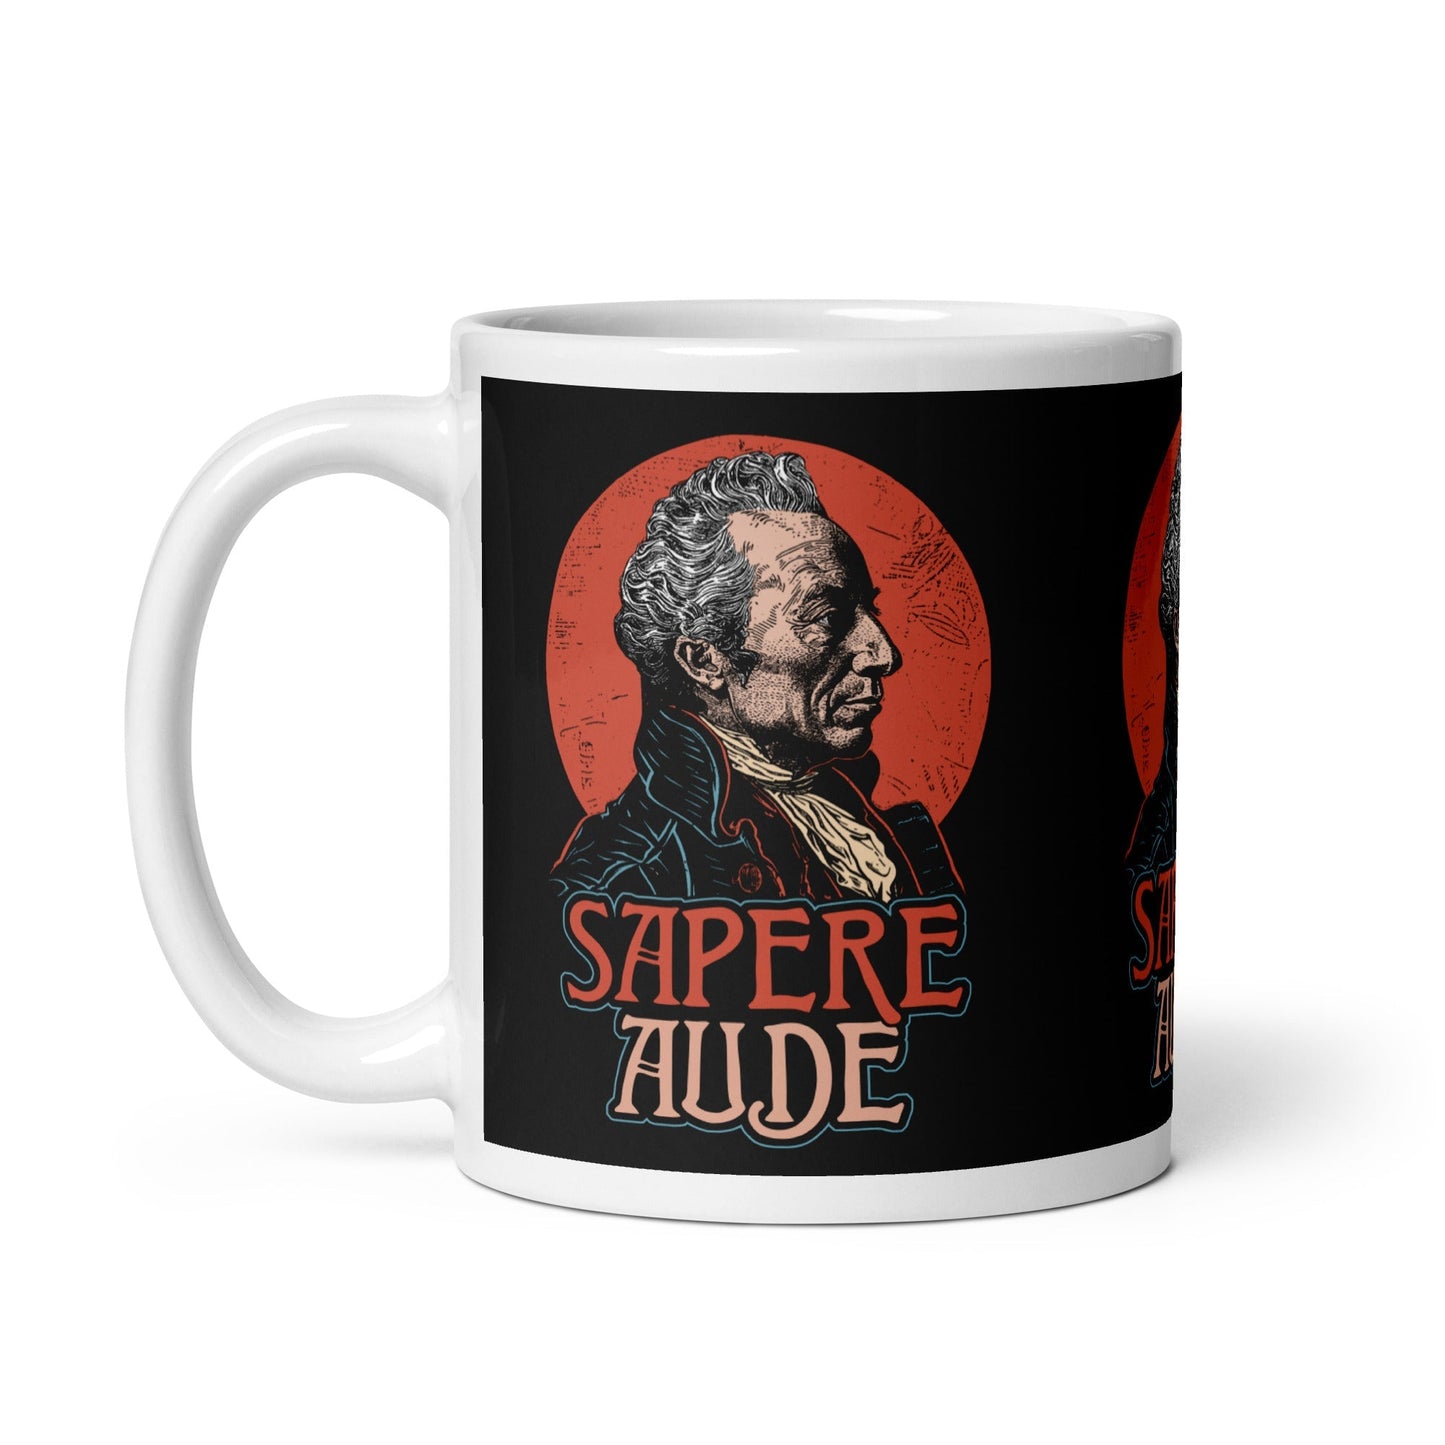 Immanuel Kant - Sapere Aude - Mug